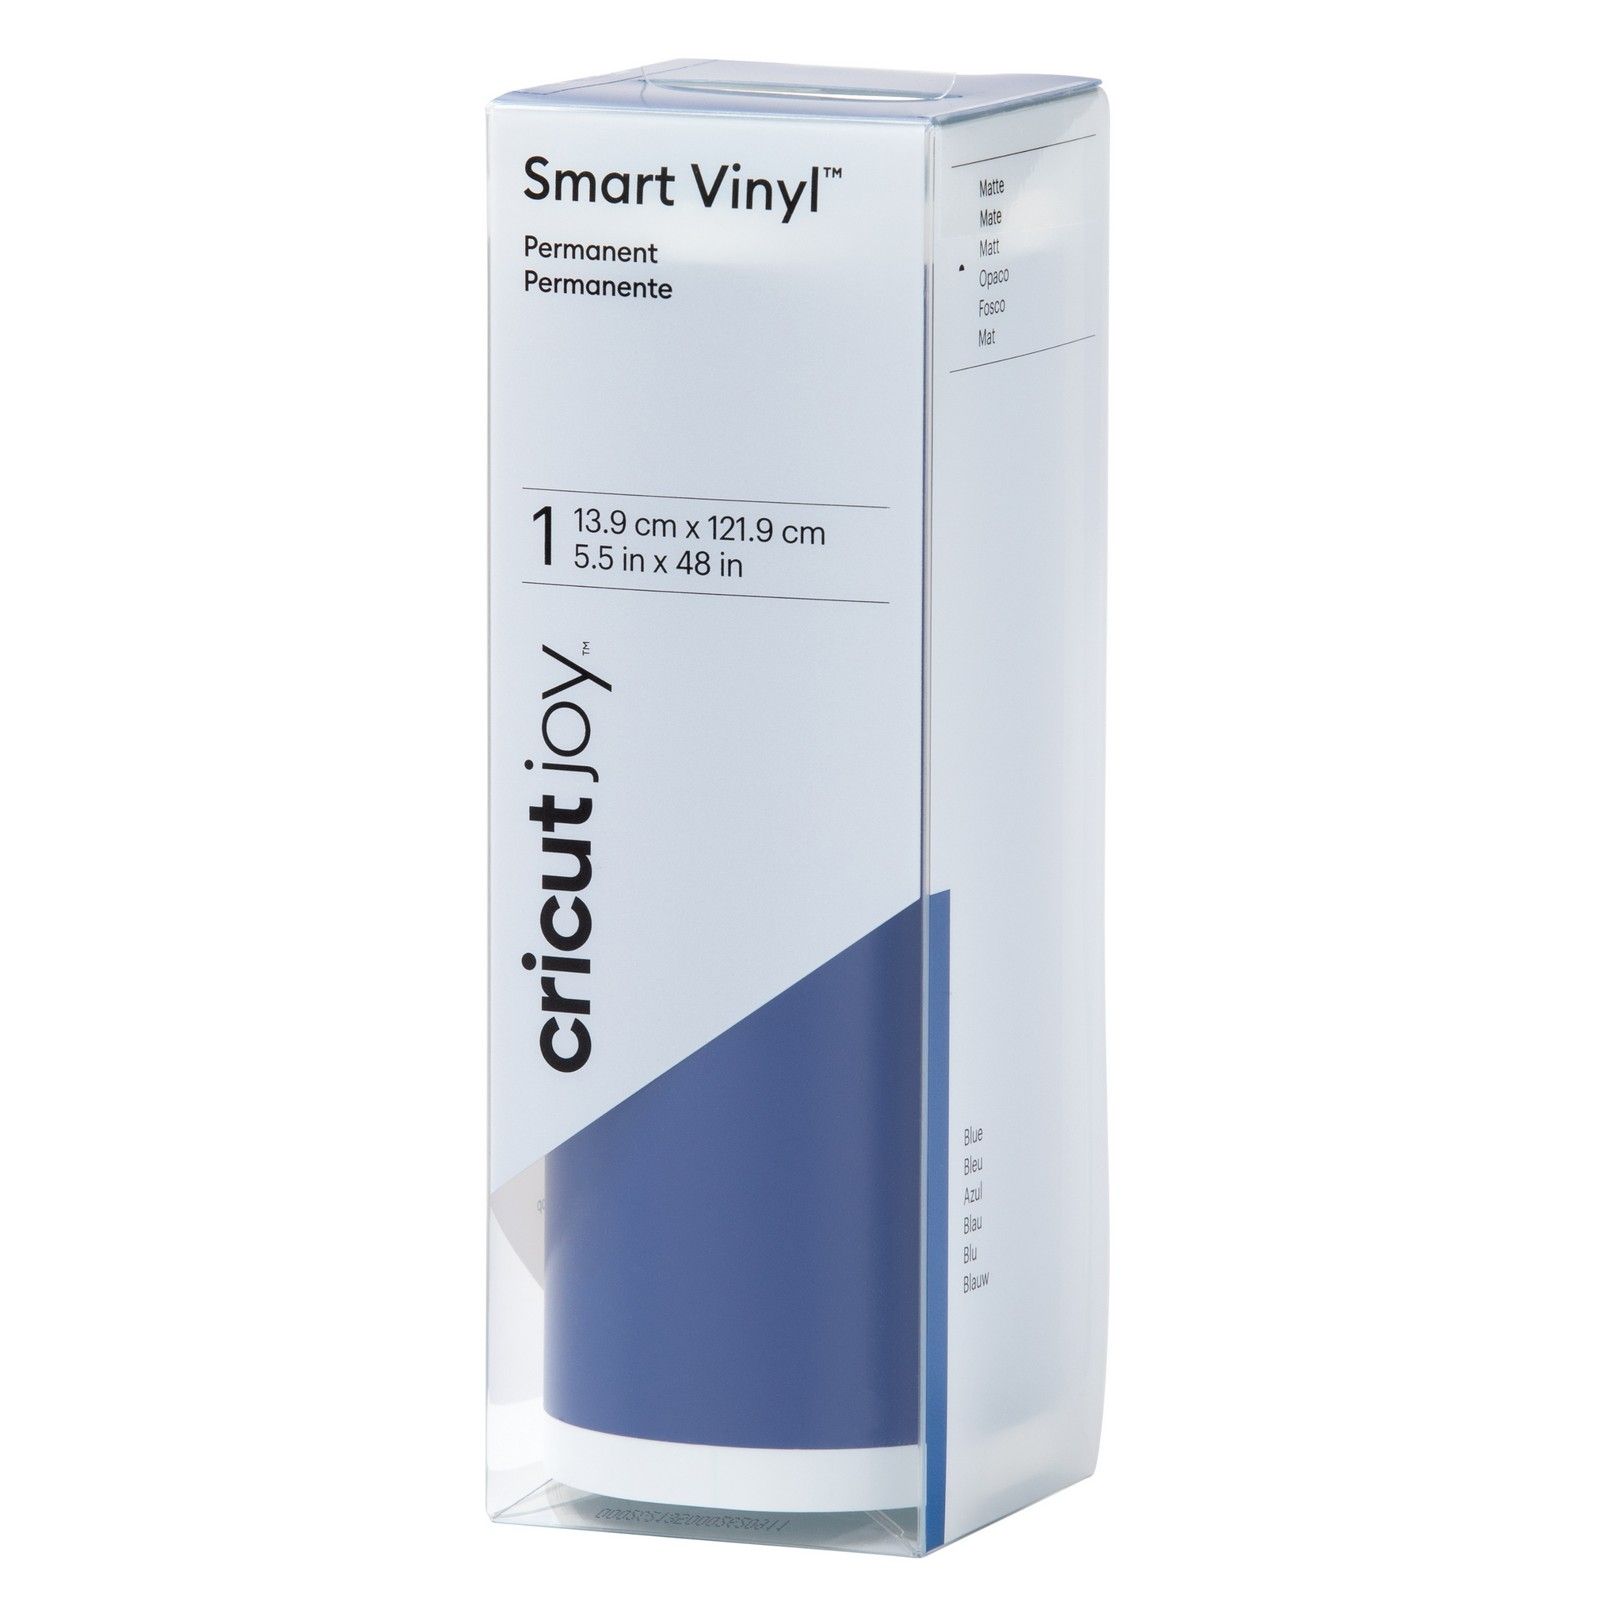 Cricut Joy Permanent Smart Vinyl - White